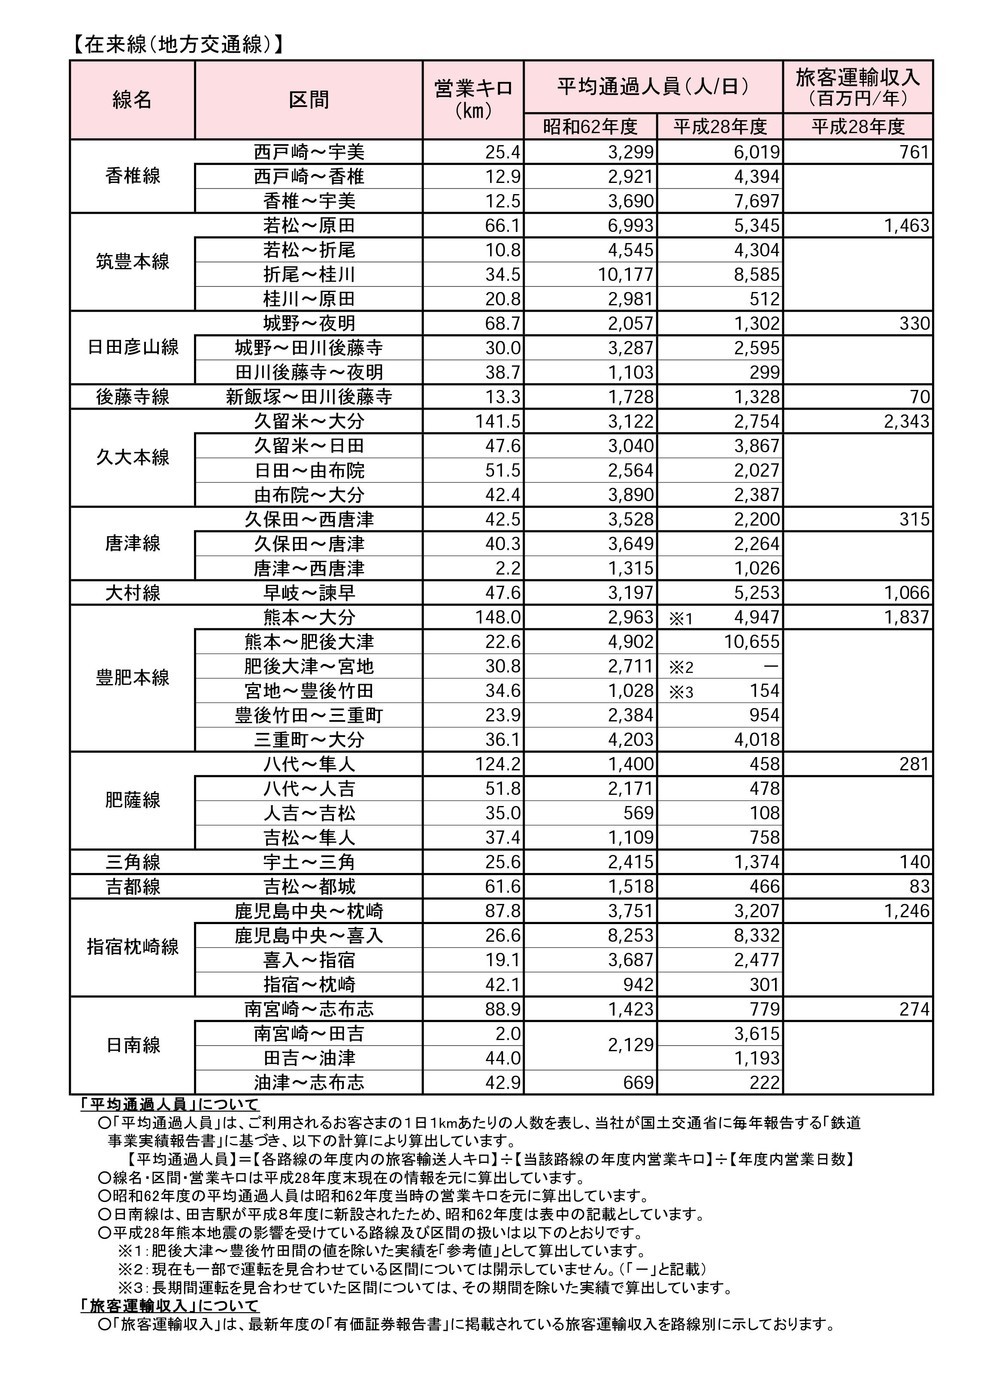 JR九州が公表した路線別の「輸送密度」（在来線の地方交通線）
